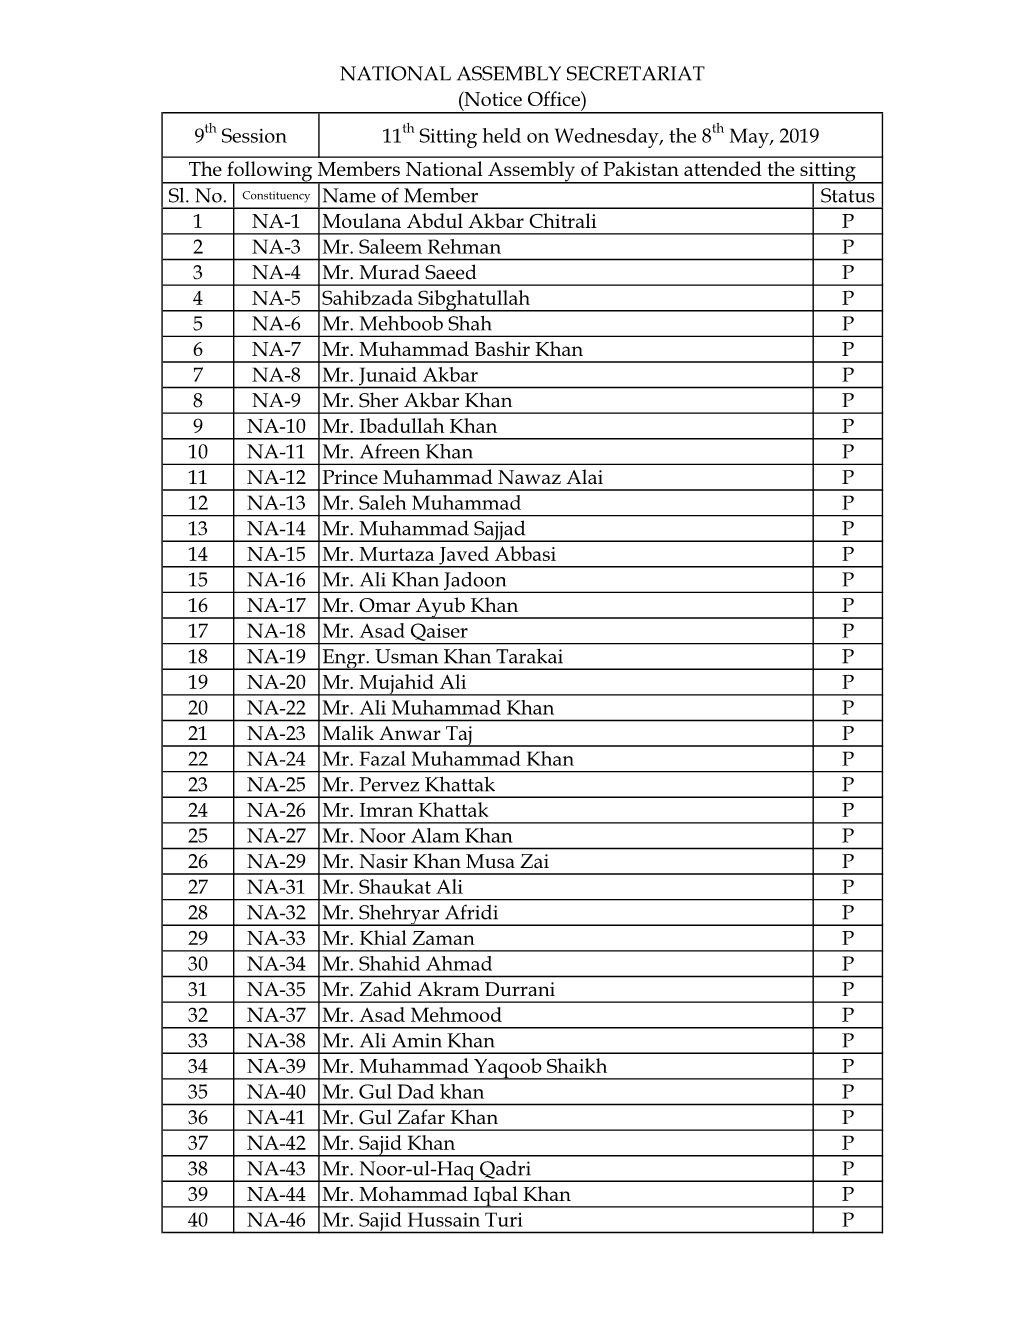 Sl. No. Constituency Name of Member Status 1 NA-1 Moulana Abdul Akbar Chitrali P 2 NA-3 Mr